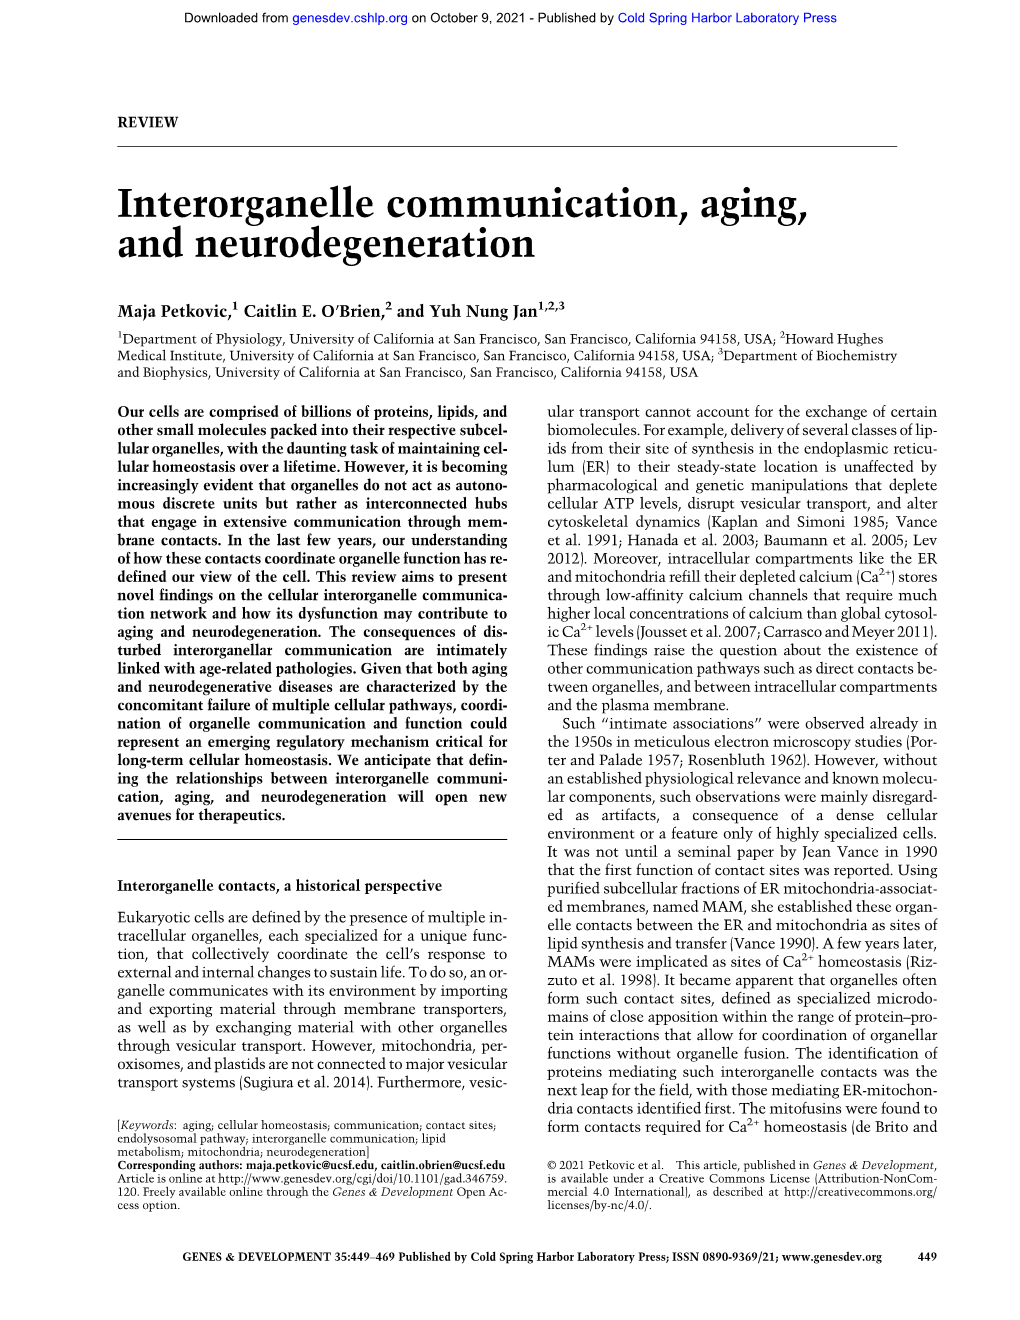 Interorganelle Communication, Aging, and Neurodegeneration